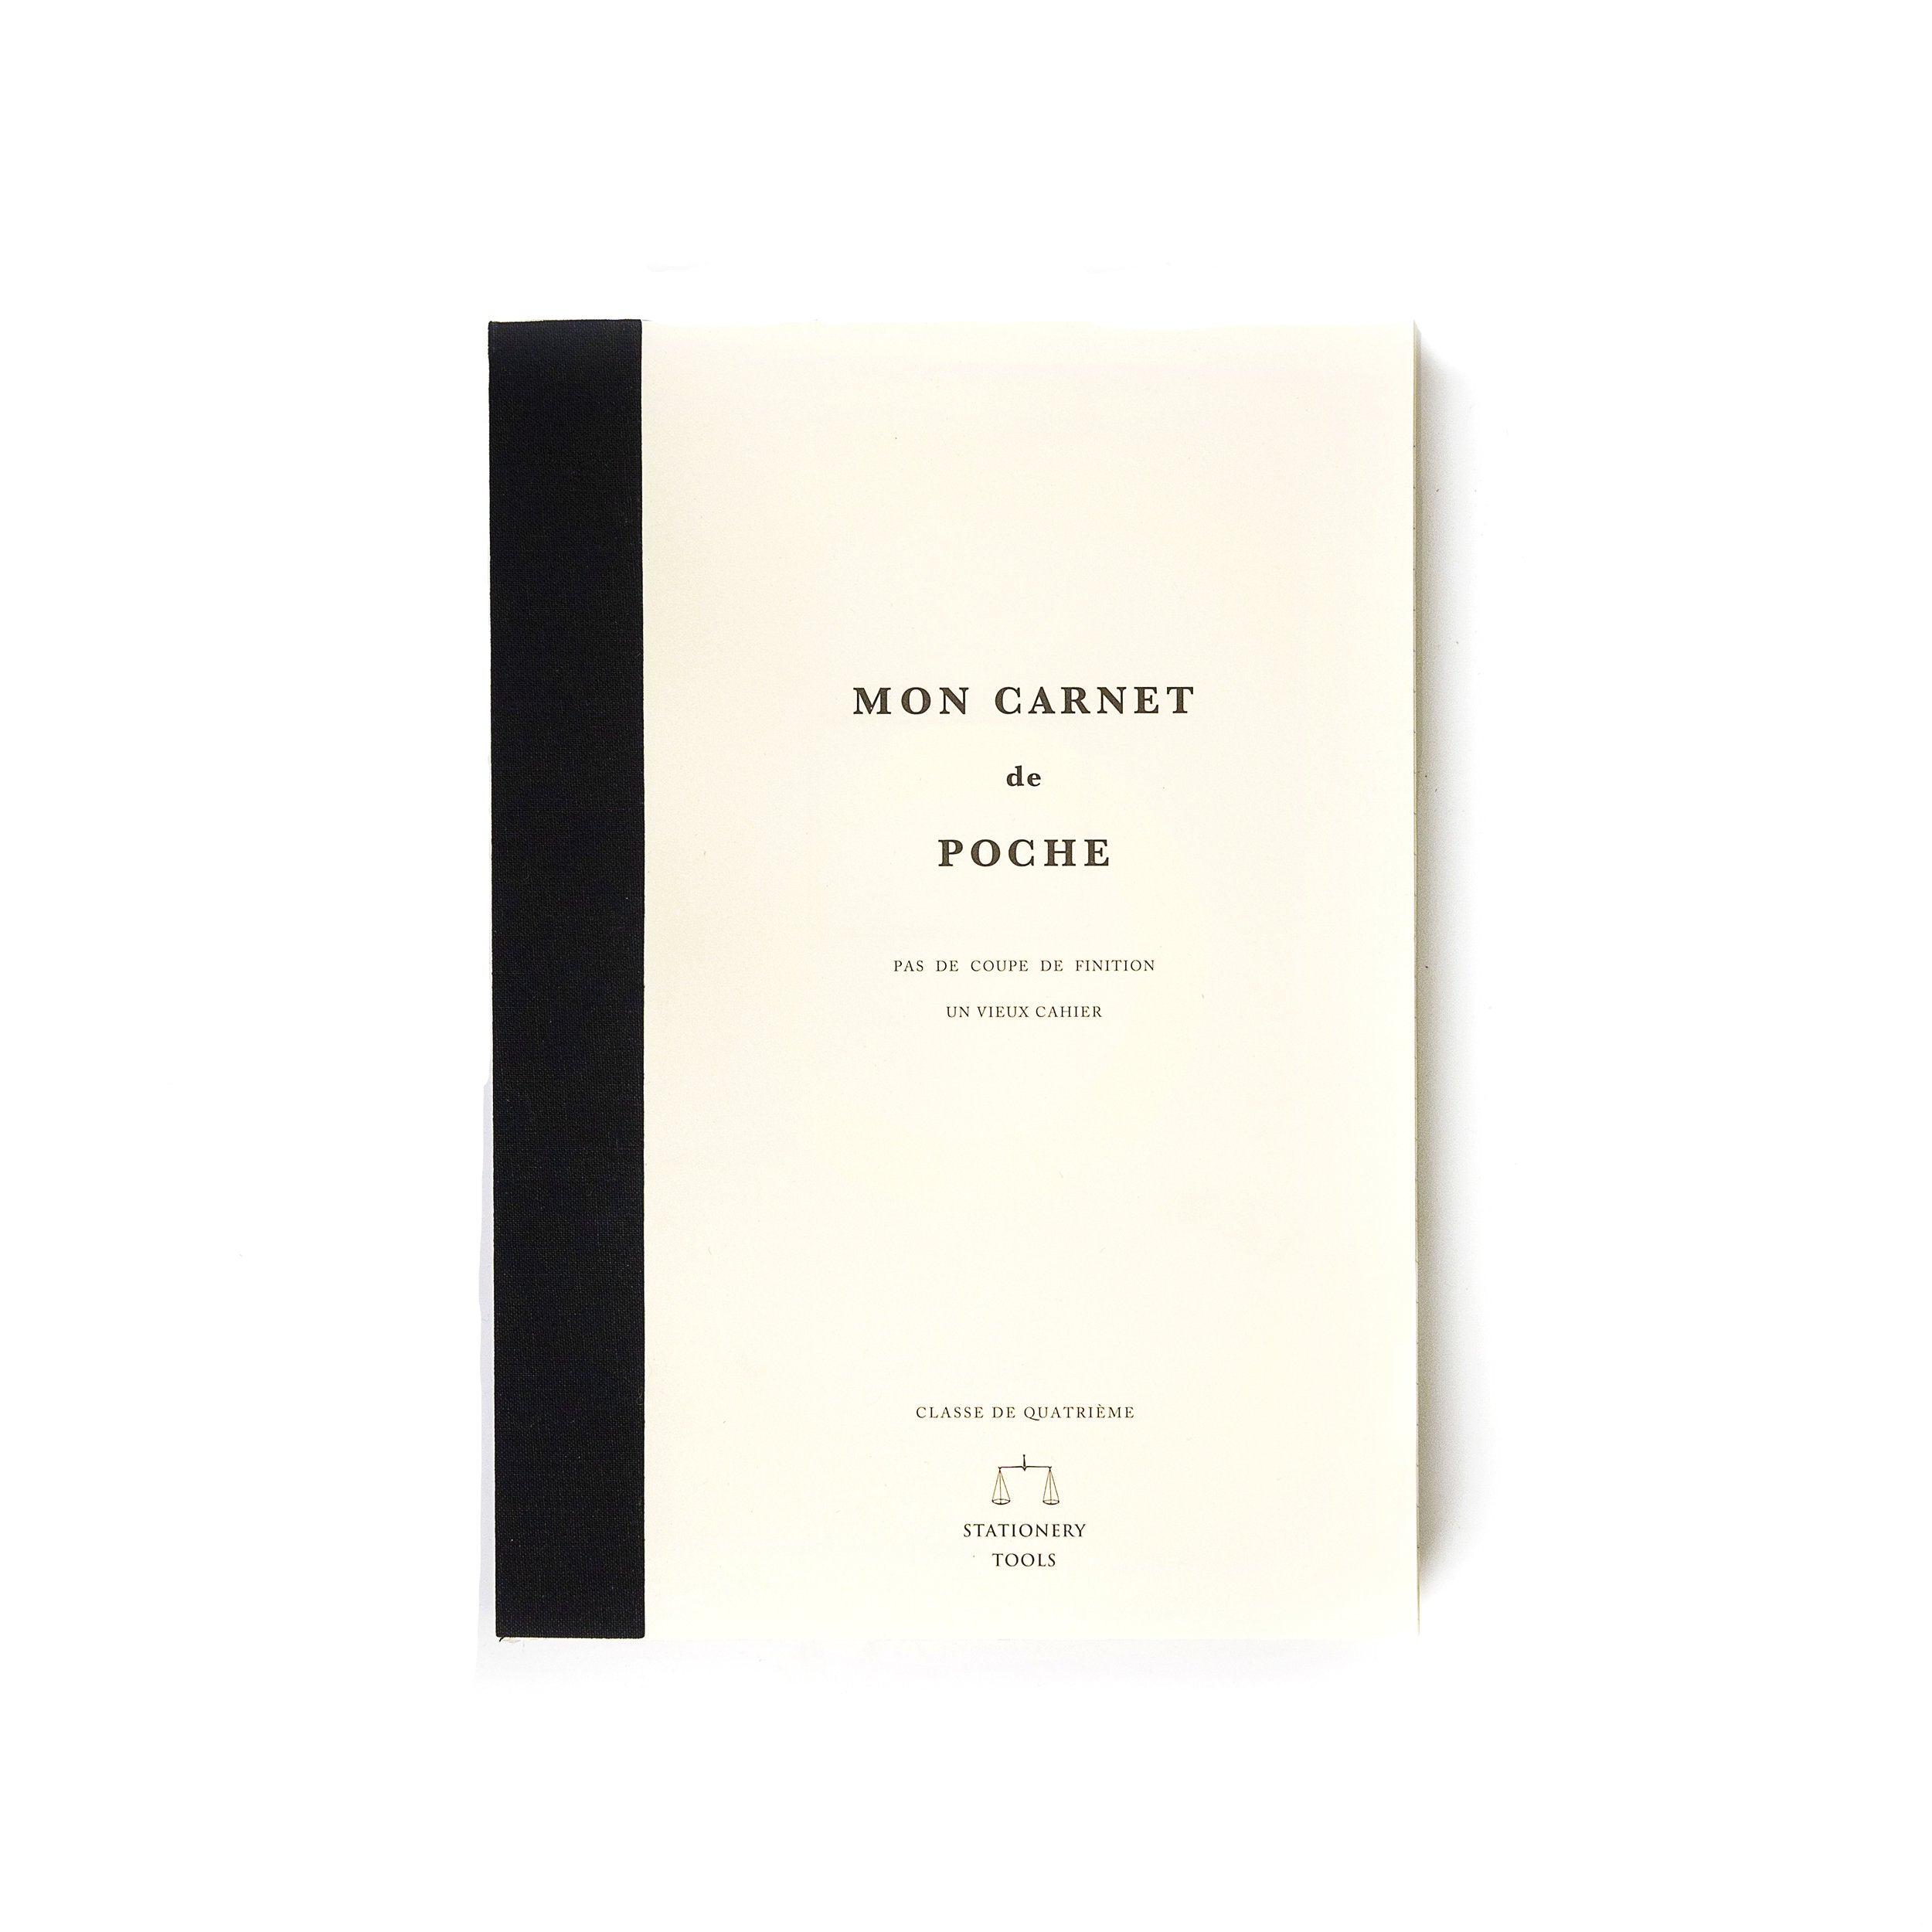 Carnet Papier Blanc - Medium - My Notebook MALACHITE GREEN